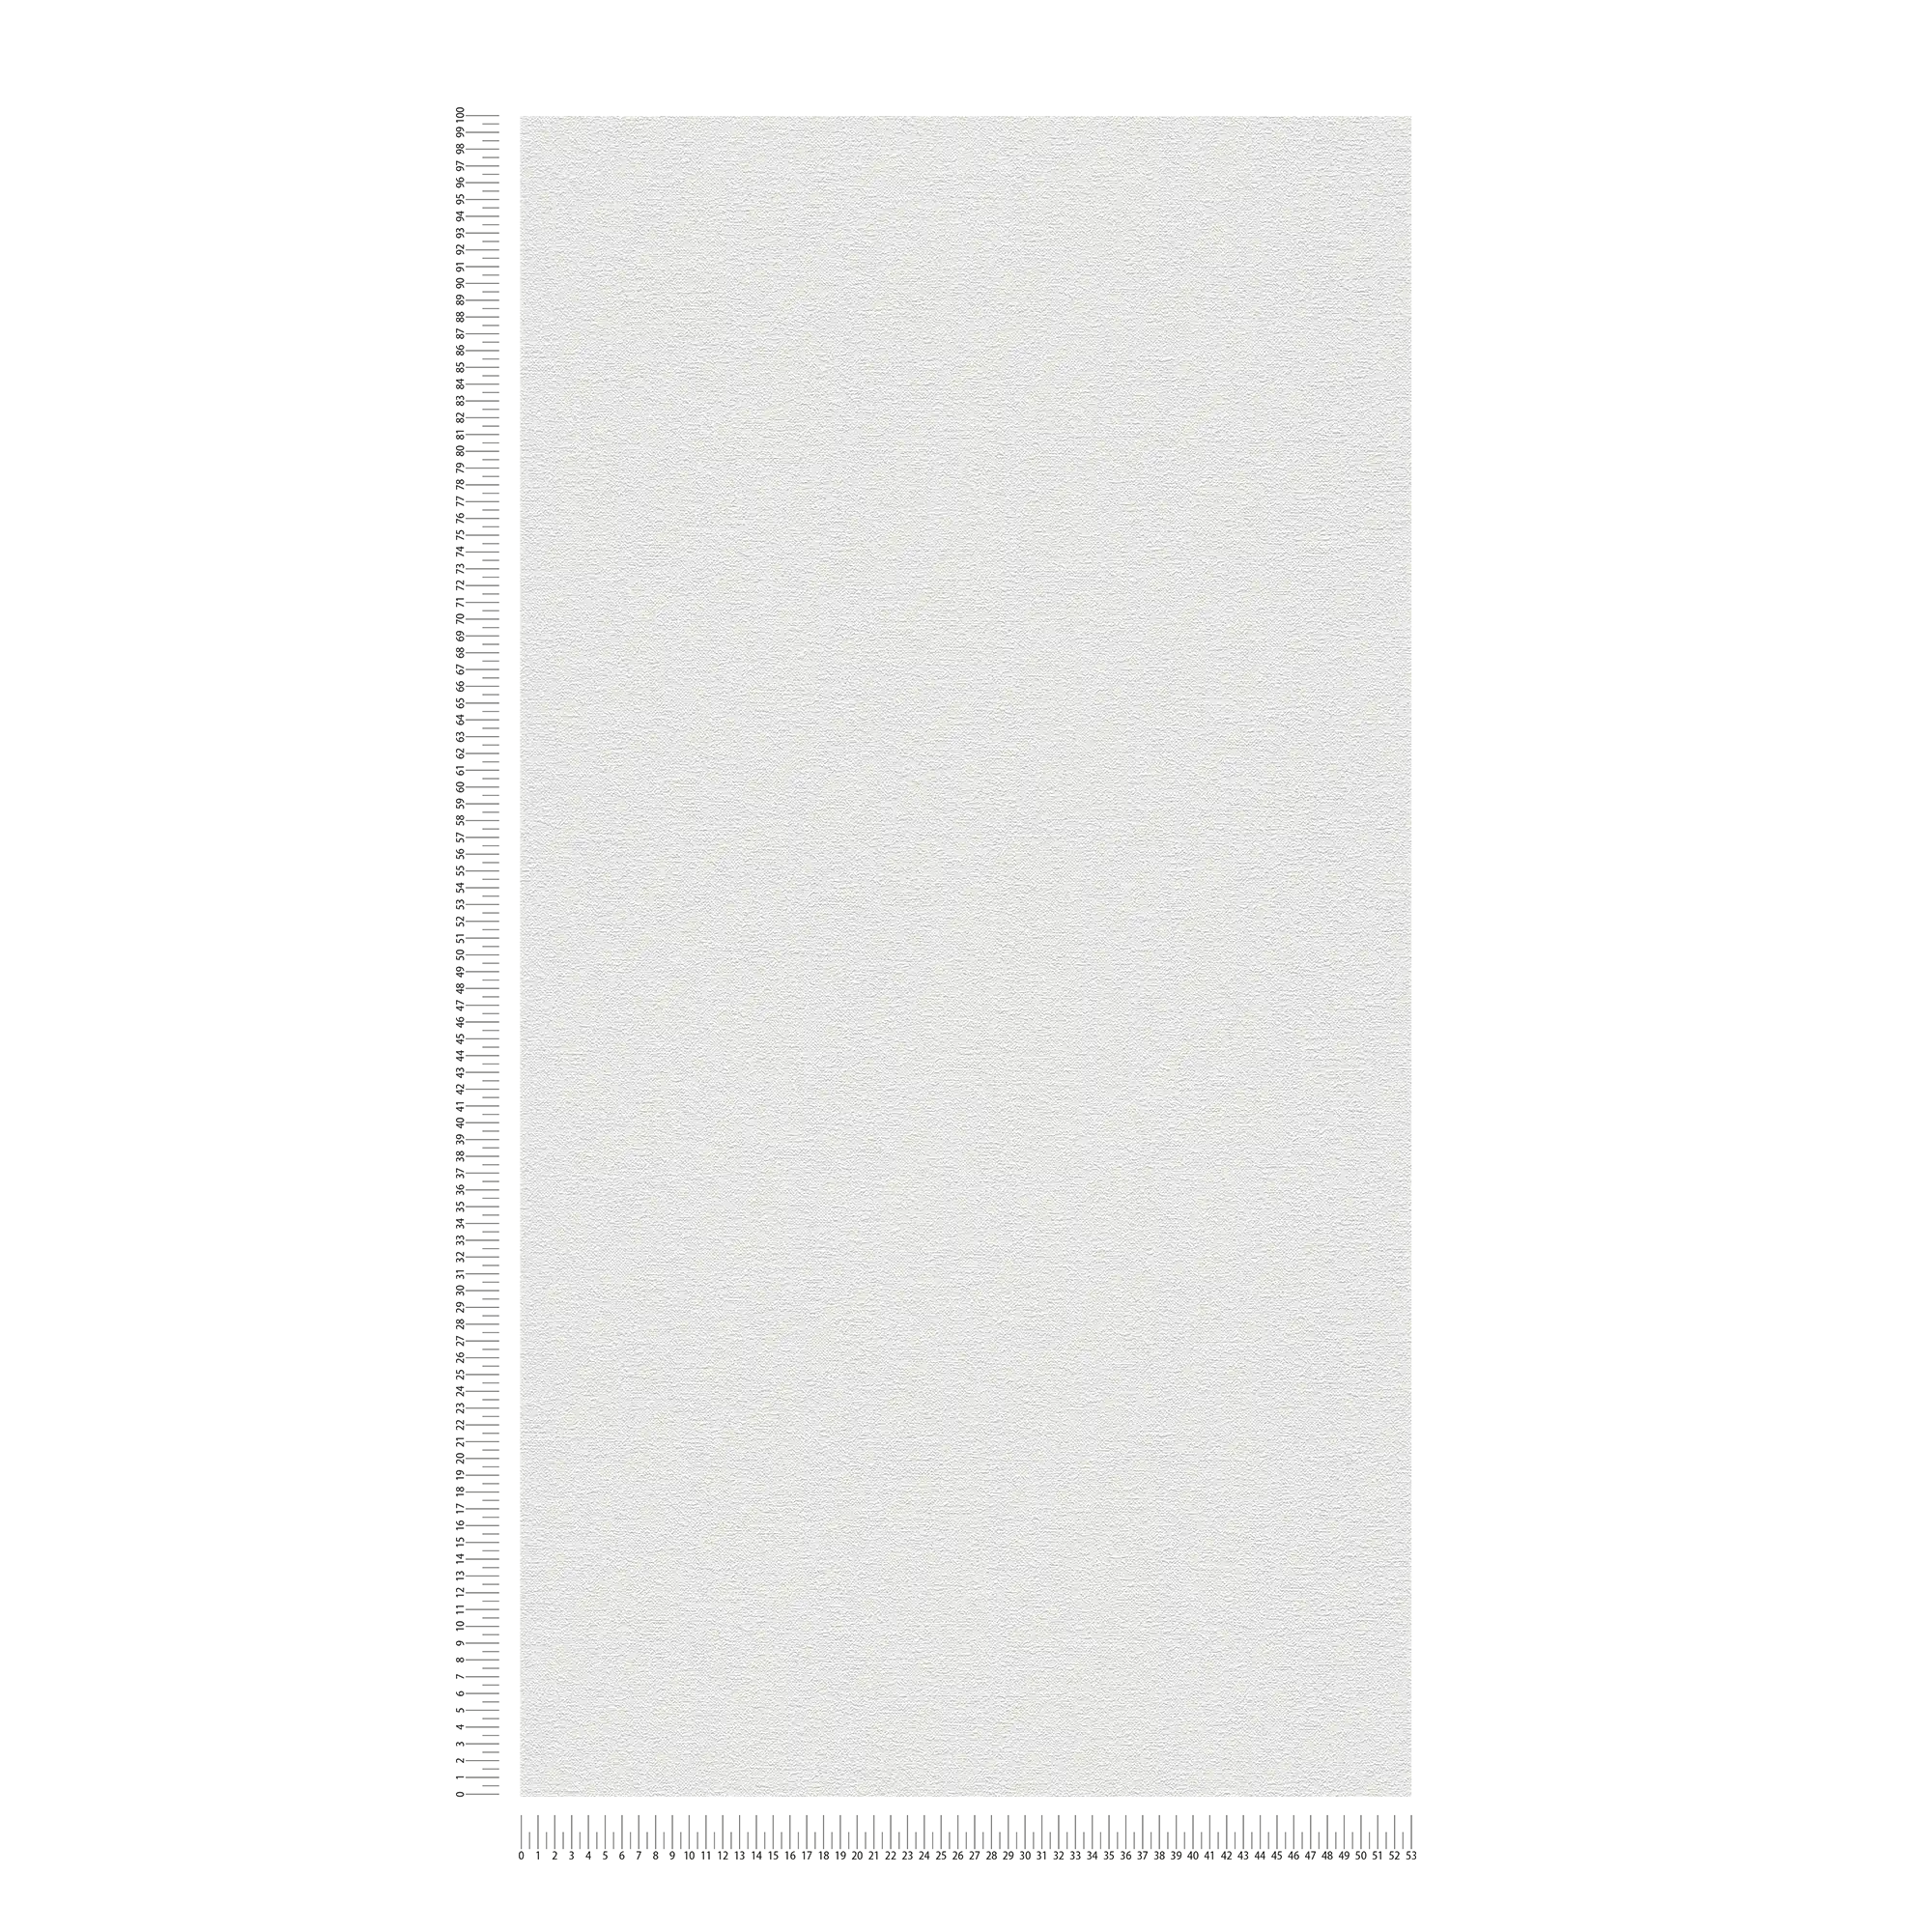             Textured plain wallpaper plain colours - white
        